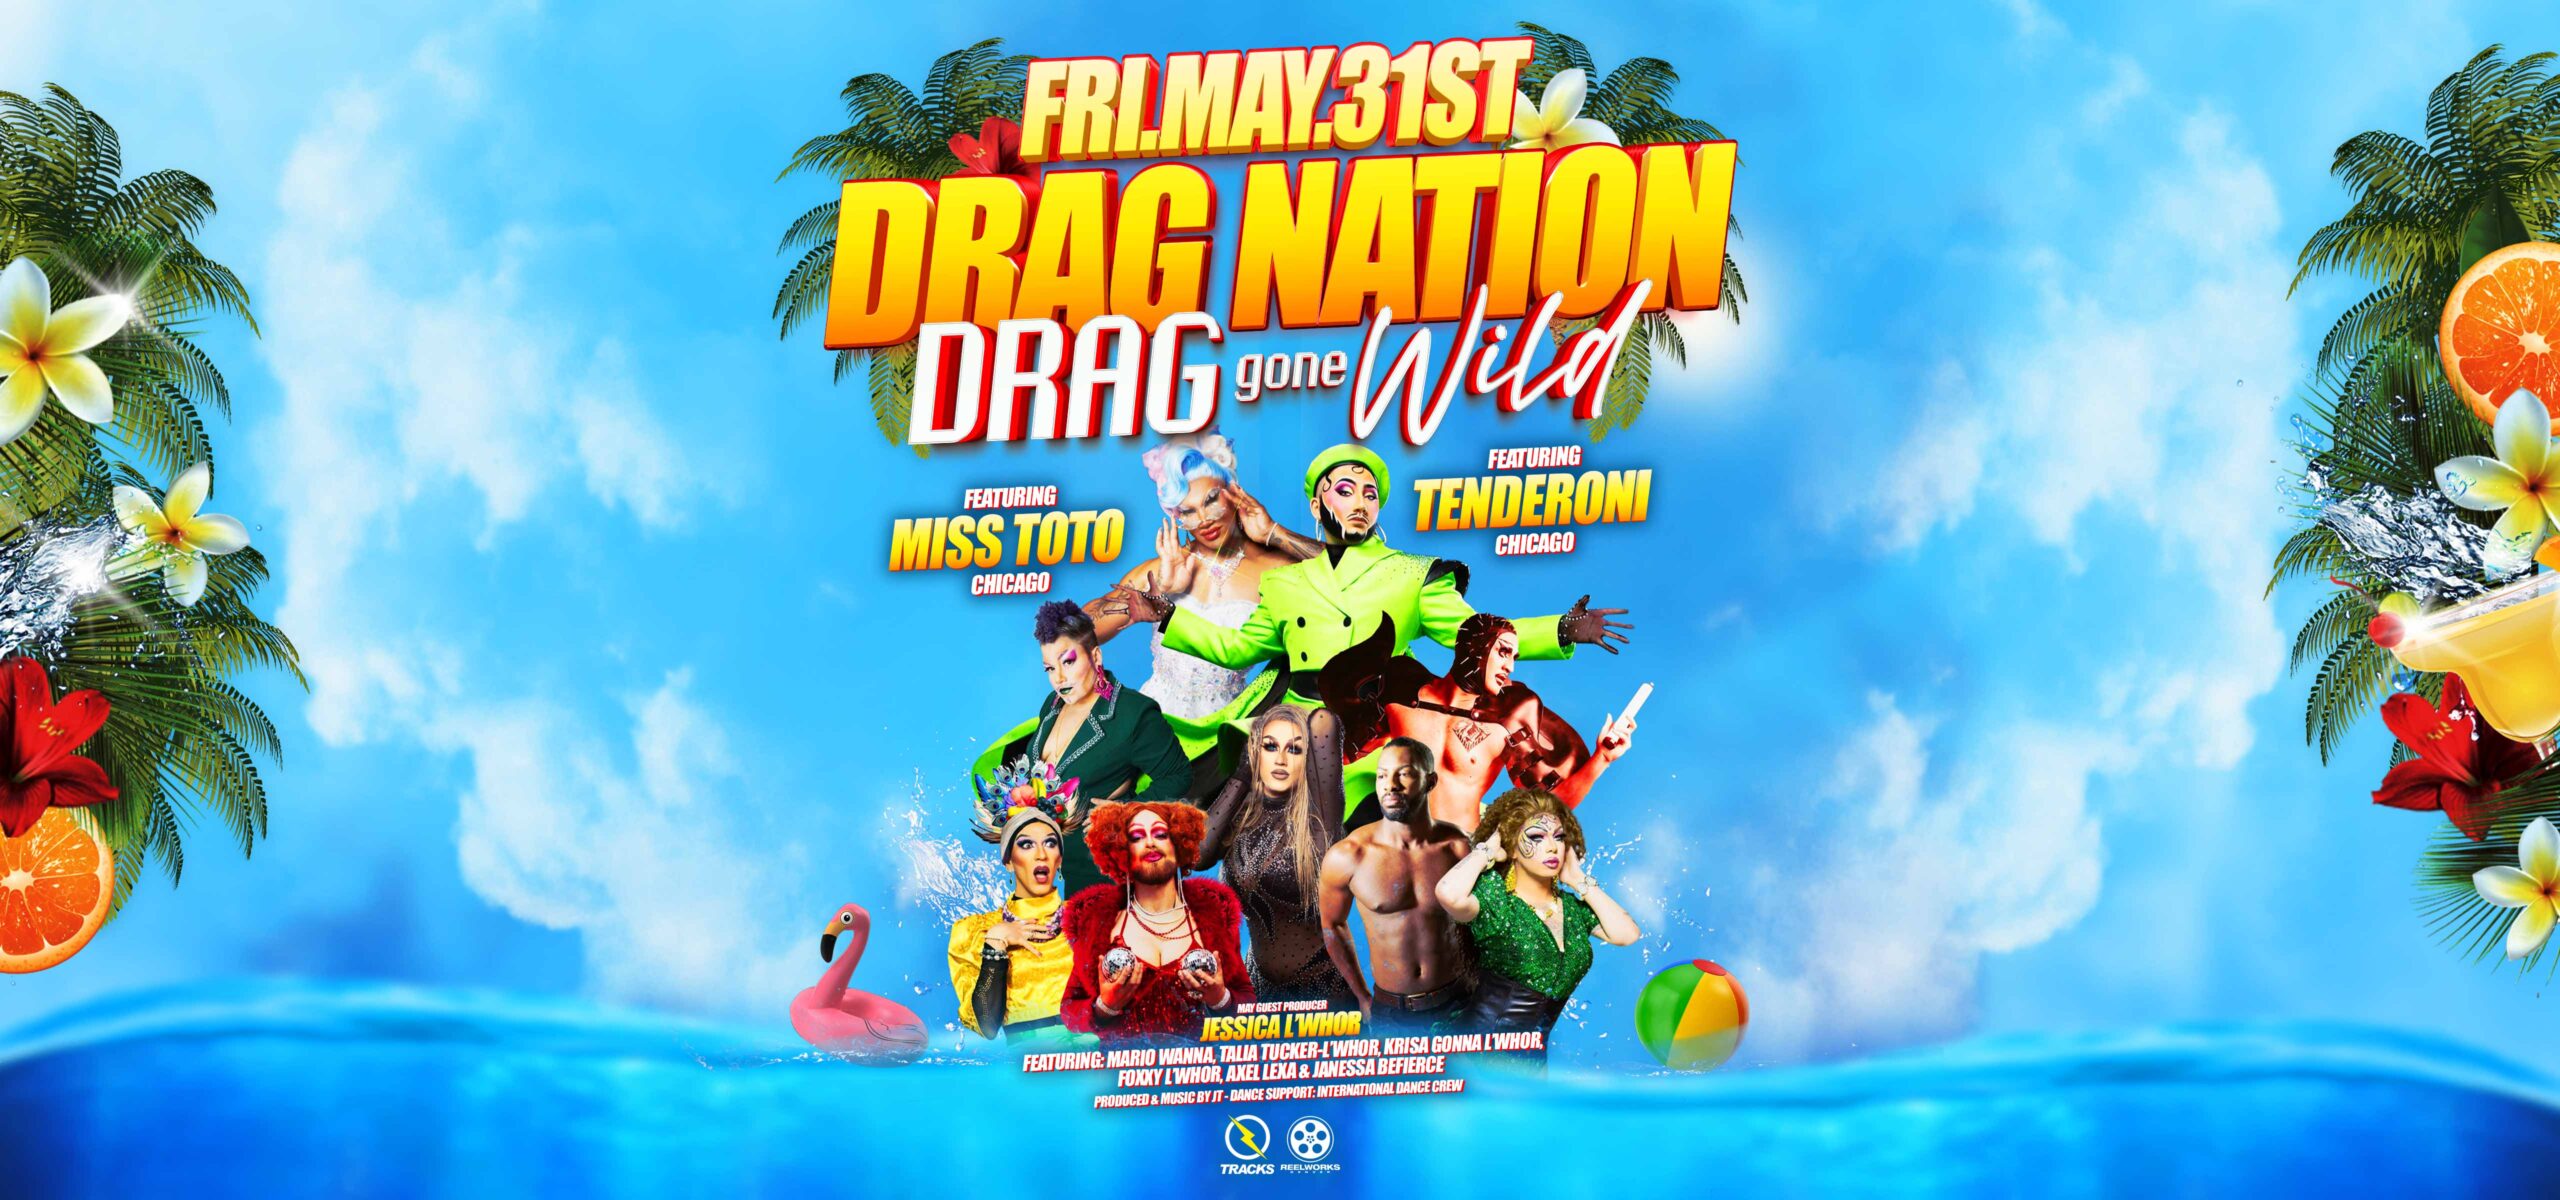 18+ Drag Nation: Drag Gone Wild – Ft. Tenderoni + Miss Toto (Chicago)